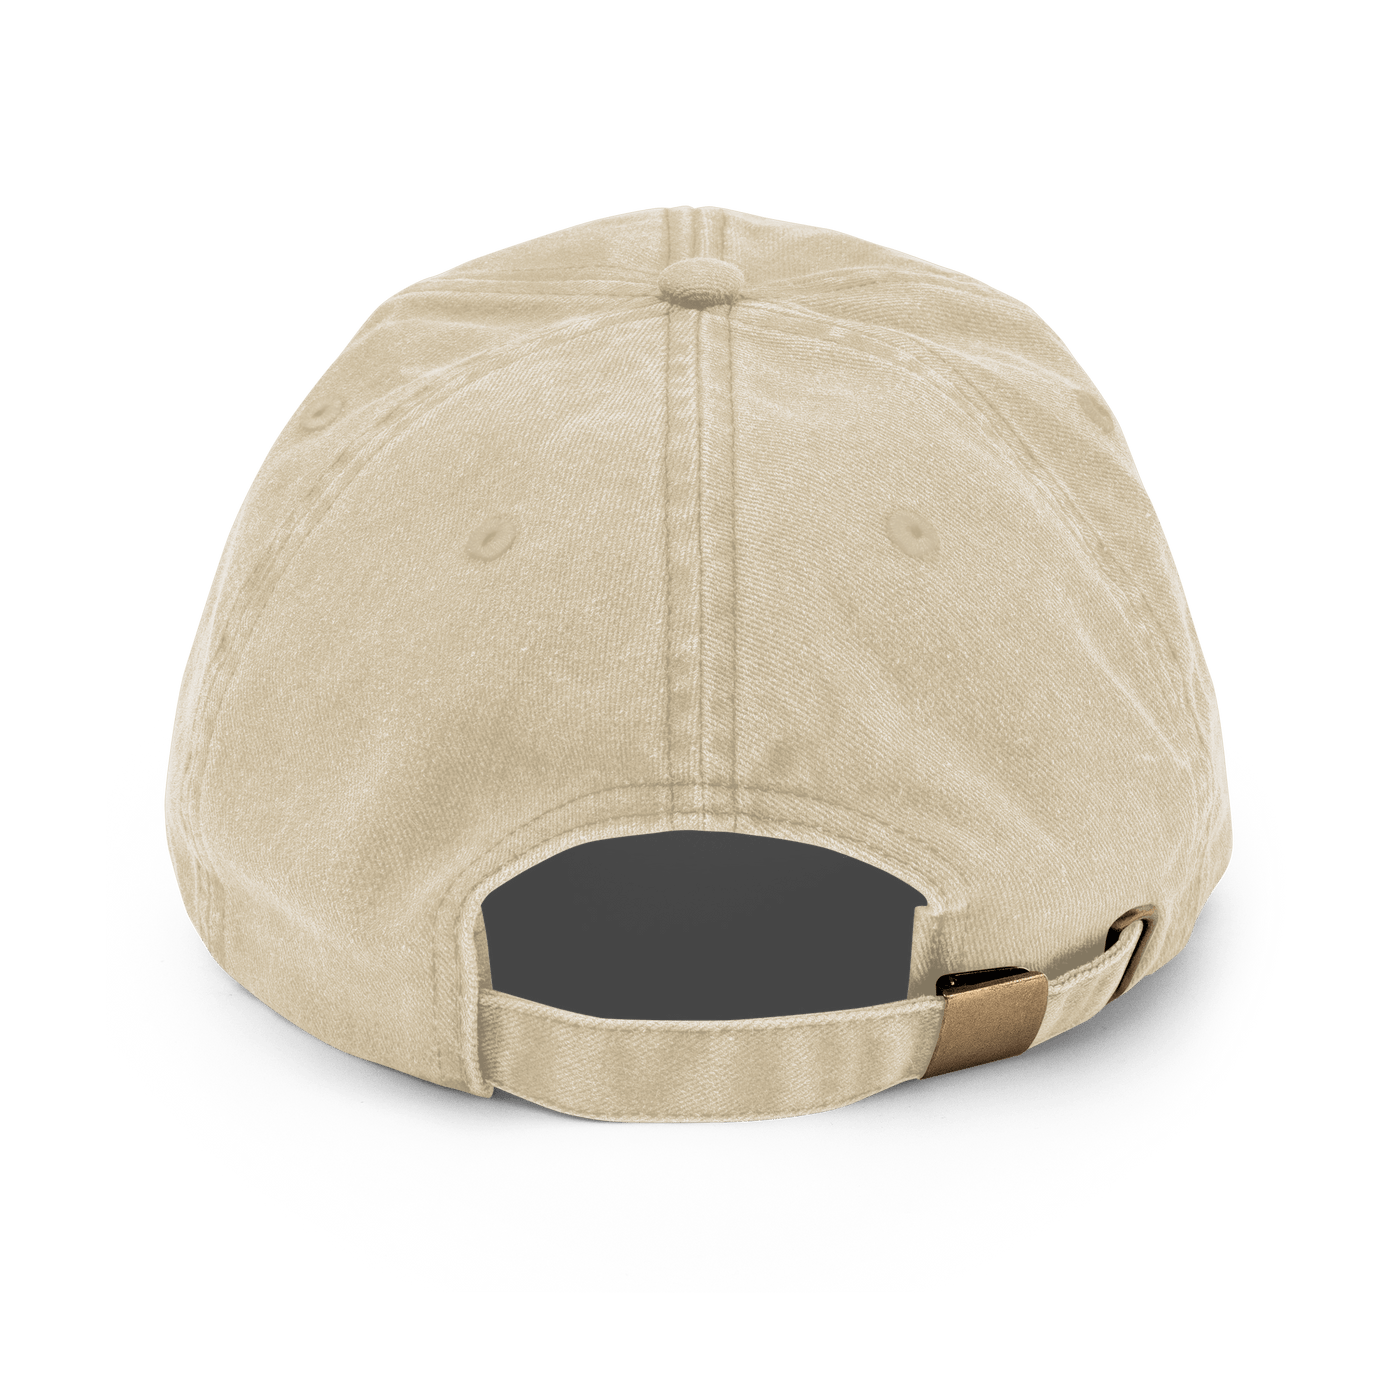 Den första Vintage Hat - Vintage Stone - - Just Another Cap Store